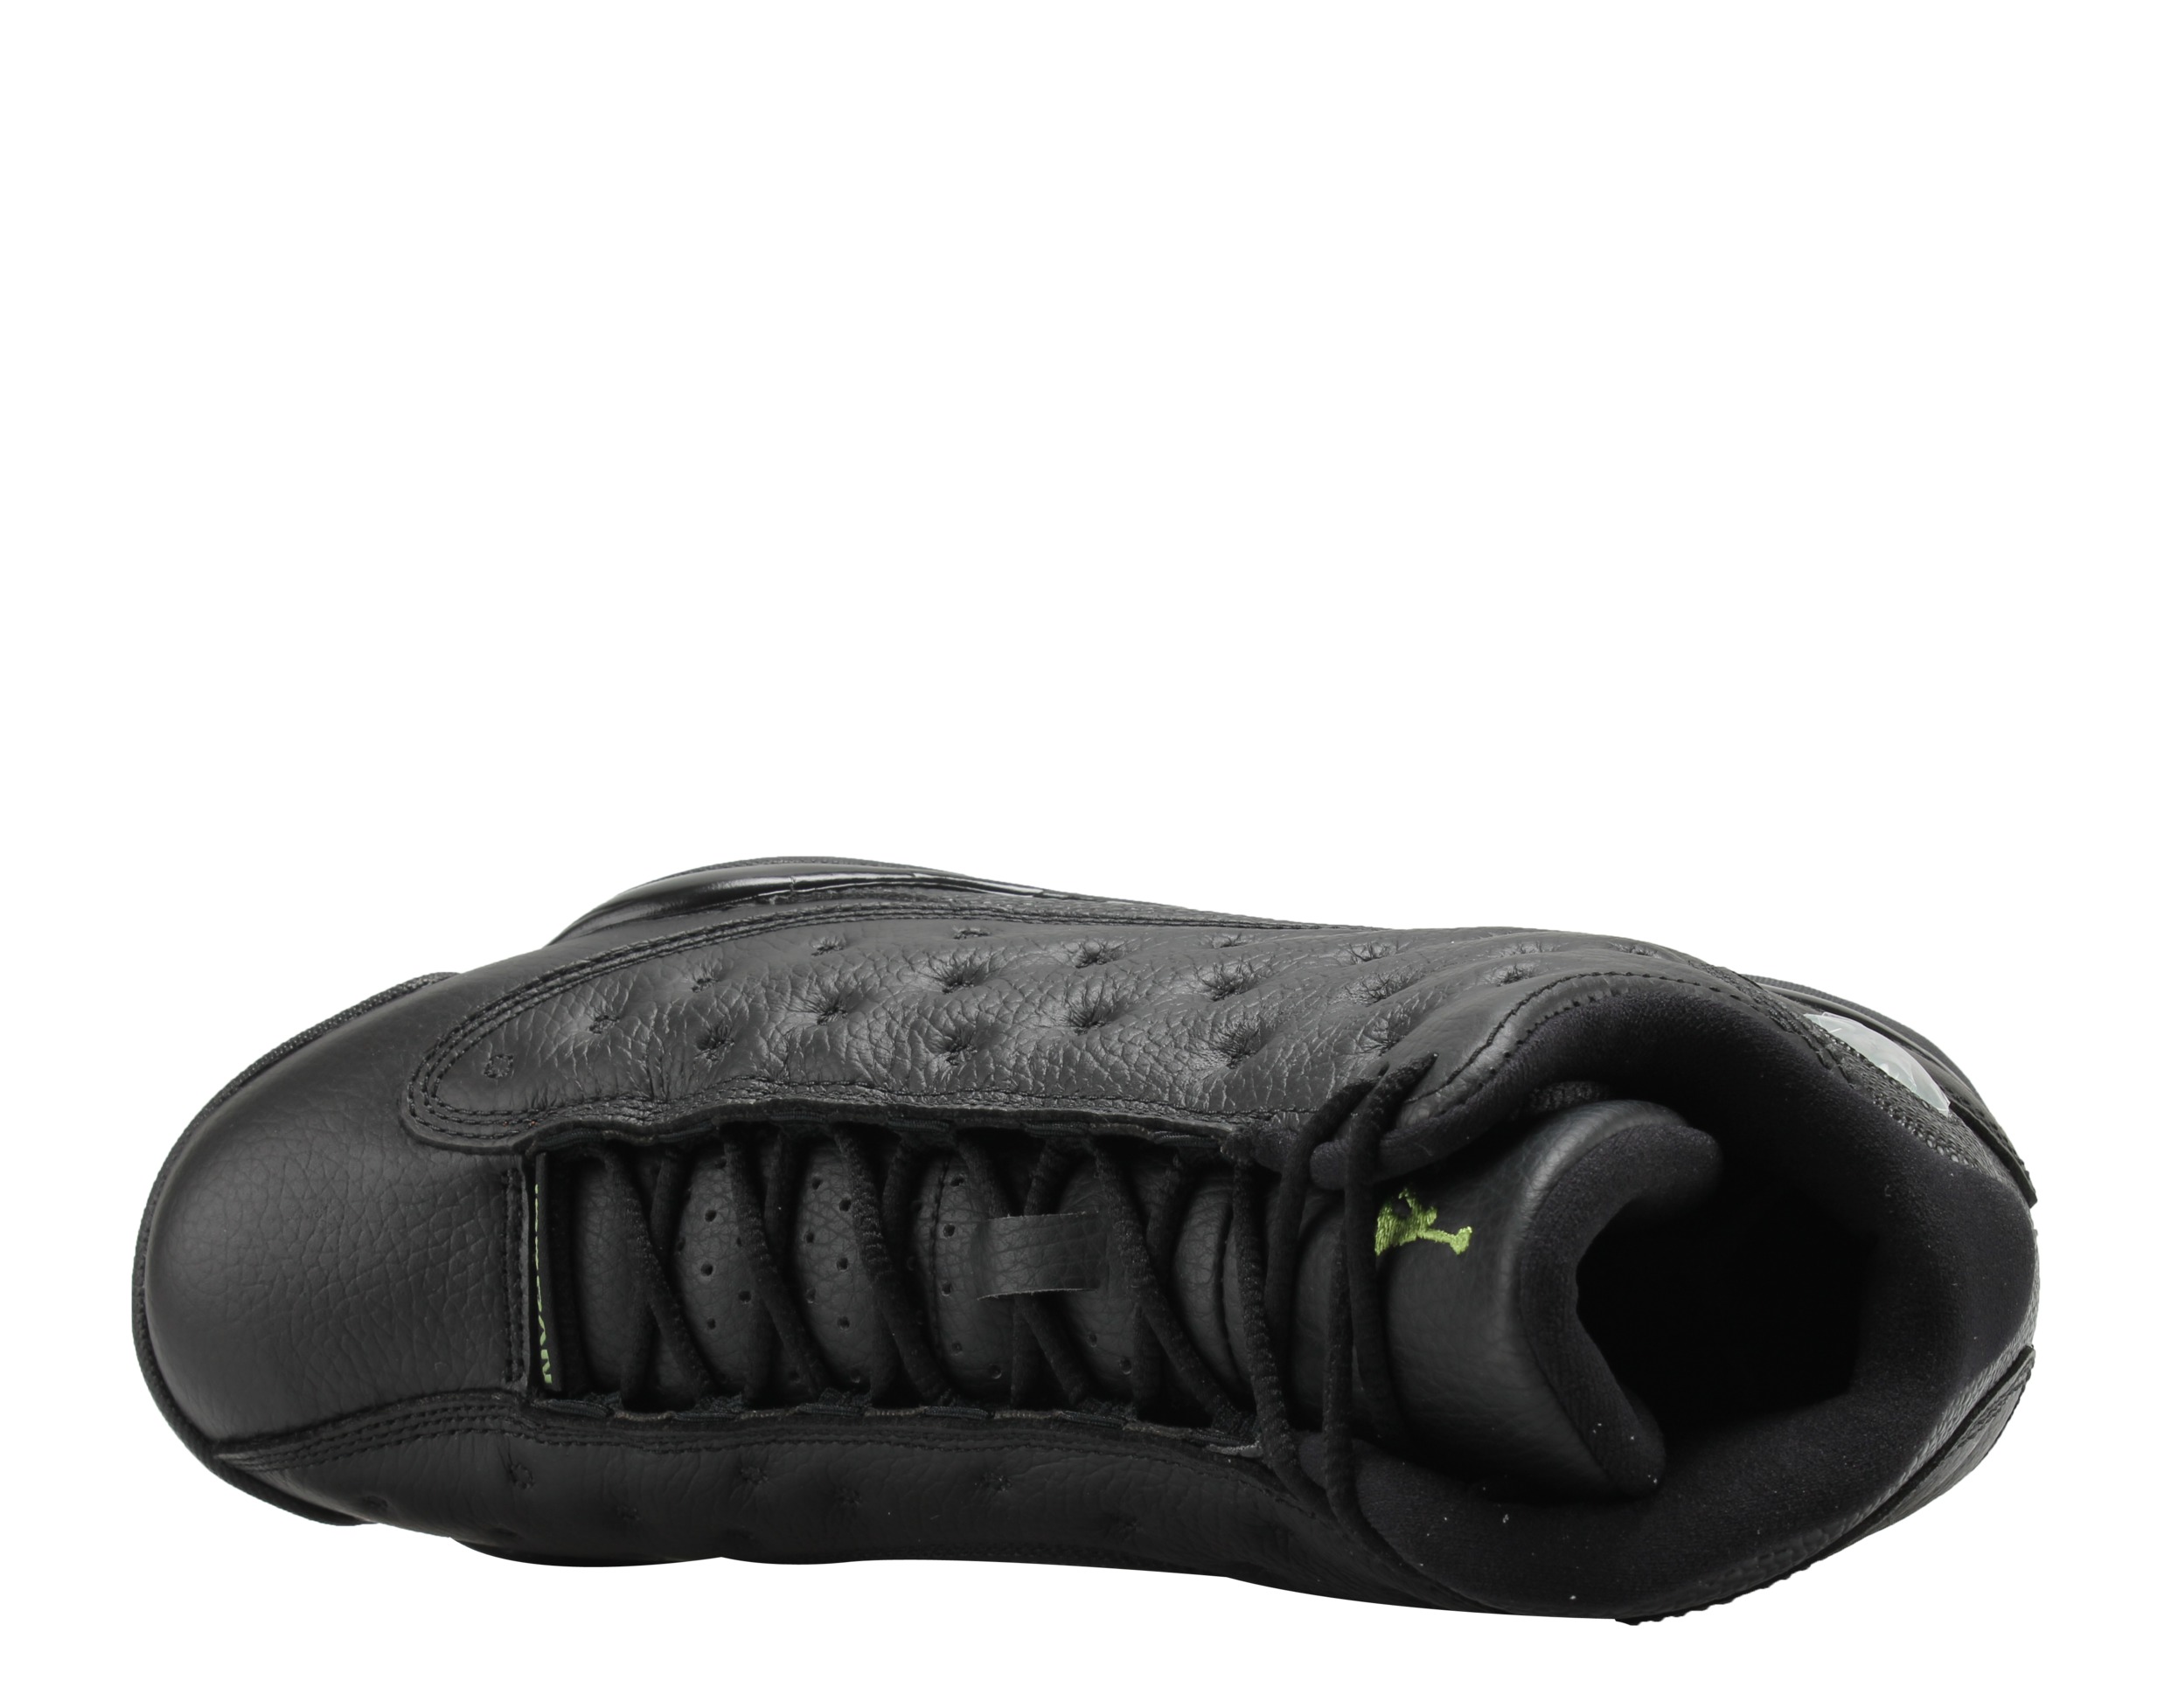 Nike Air Jordan 13 Retro Men's Basketball Shoes Size 11 - image 4 of 6